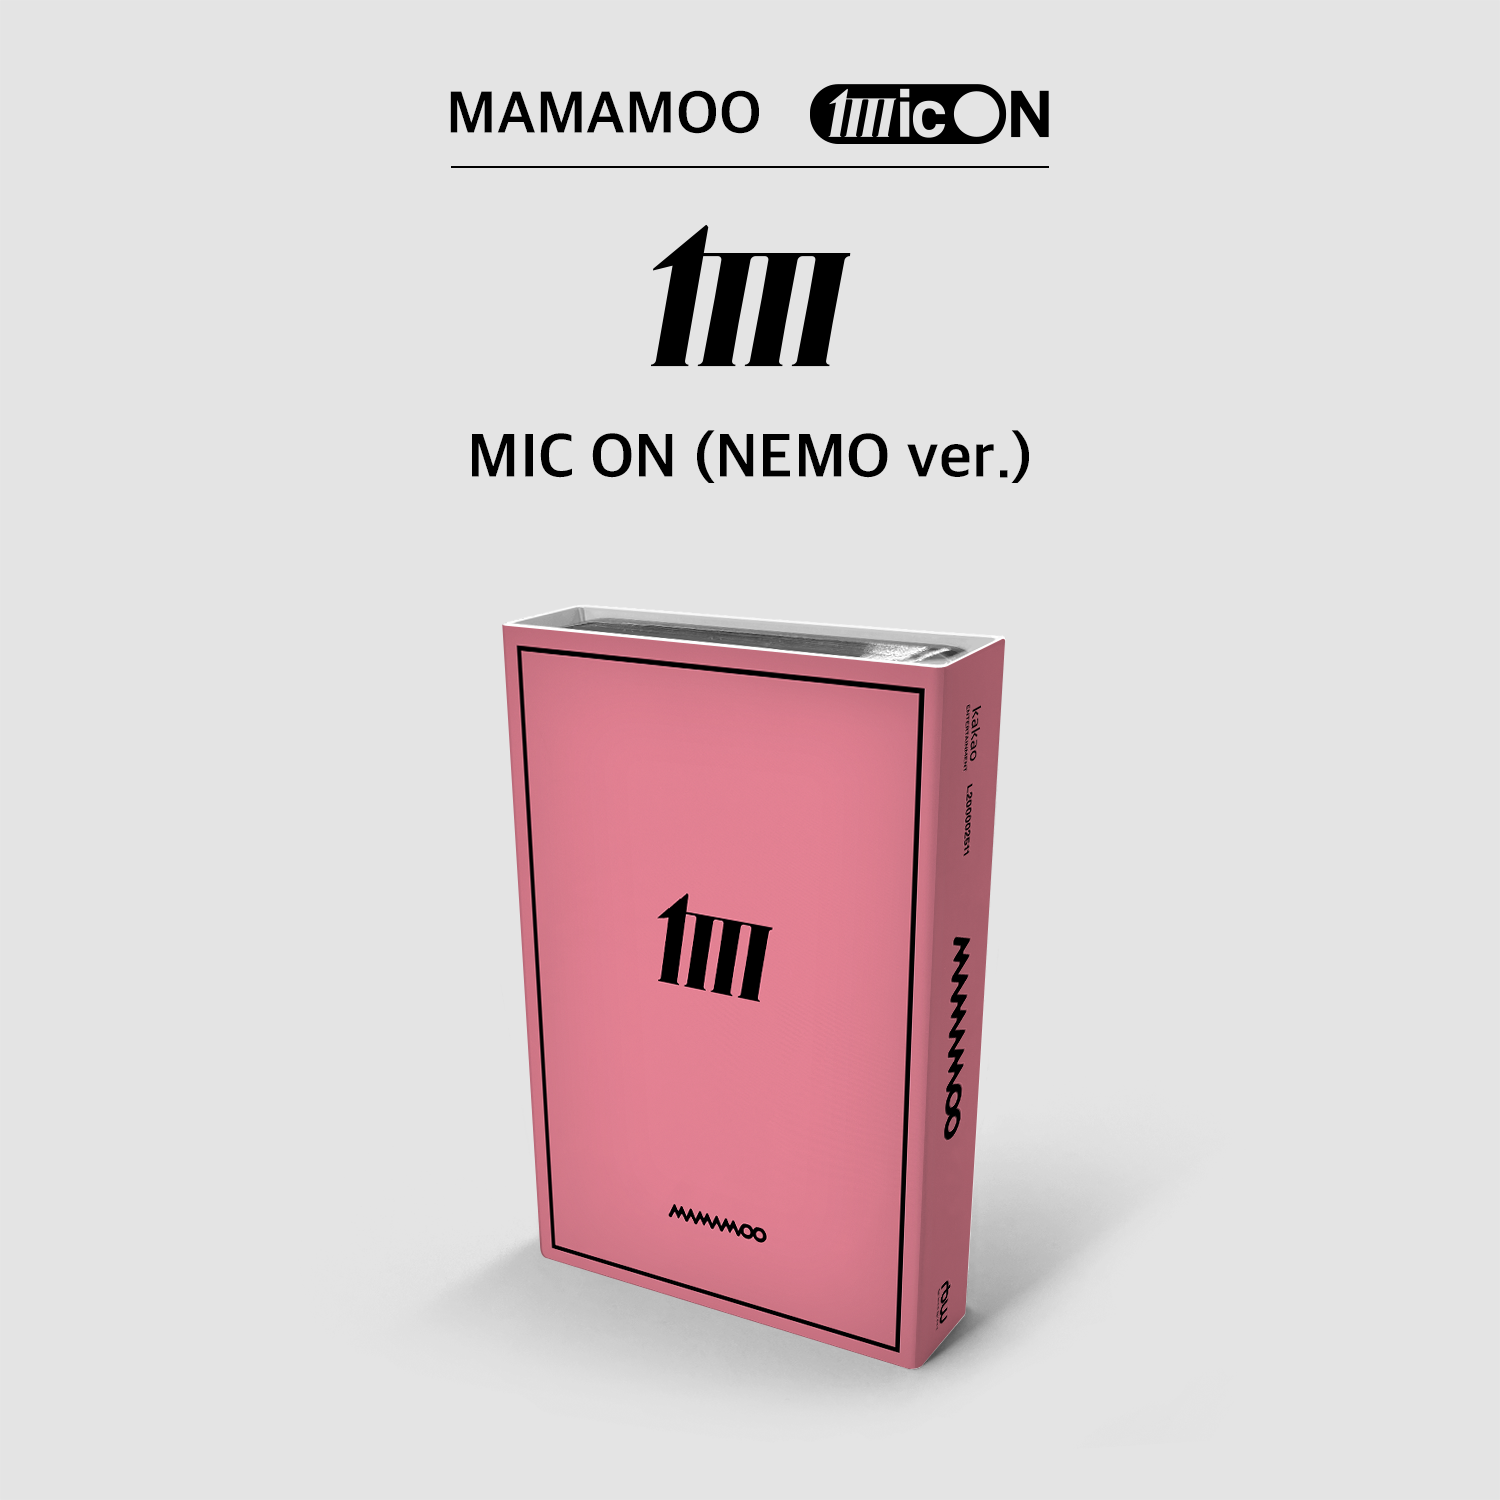 MAMAMOO - MIC ON (NEMO ver.) (Limited Edition)